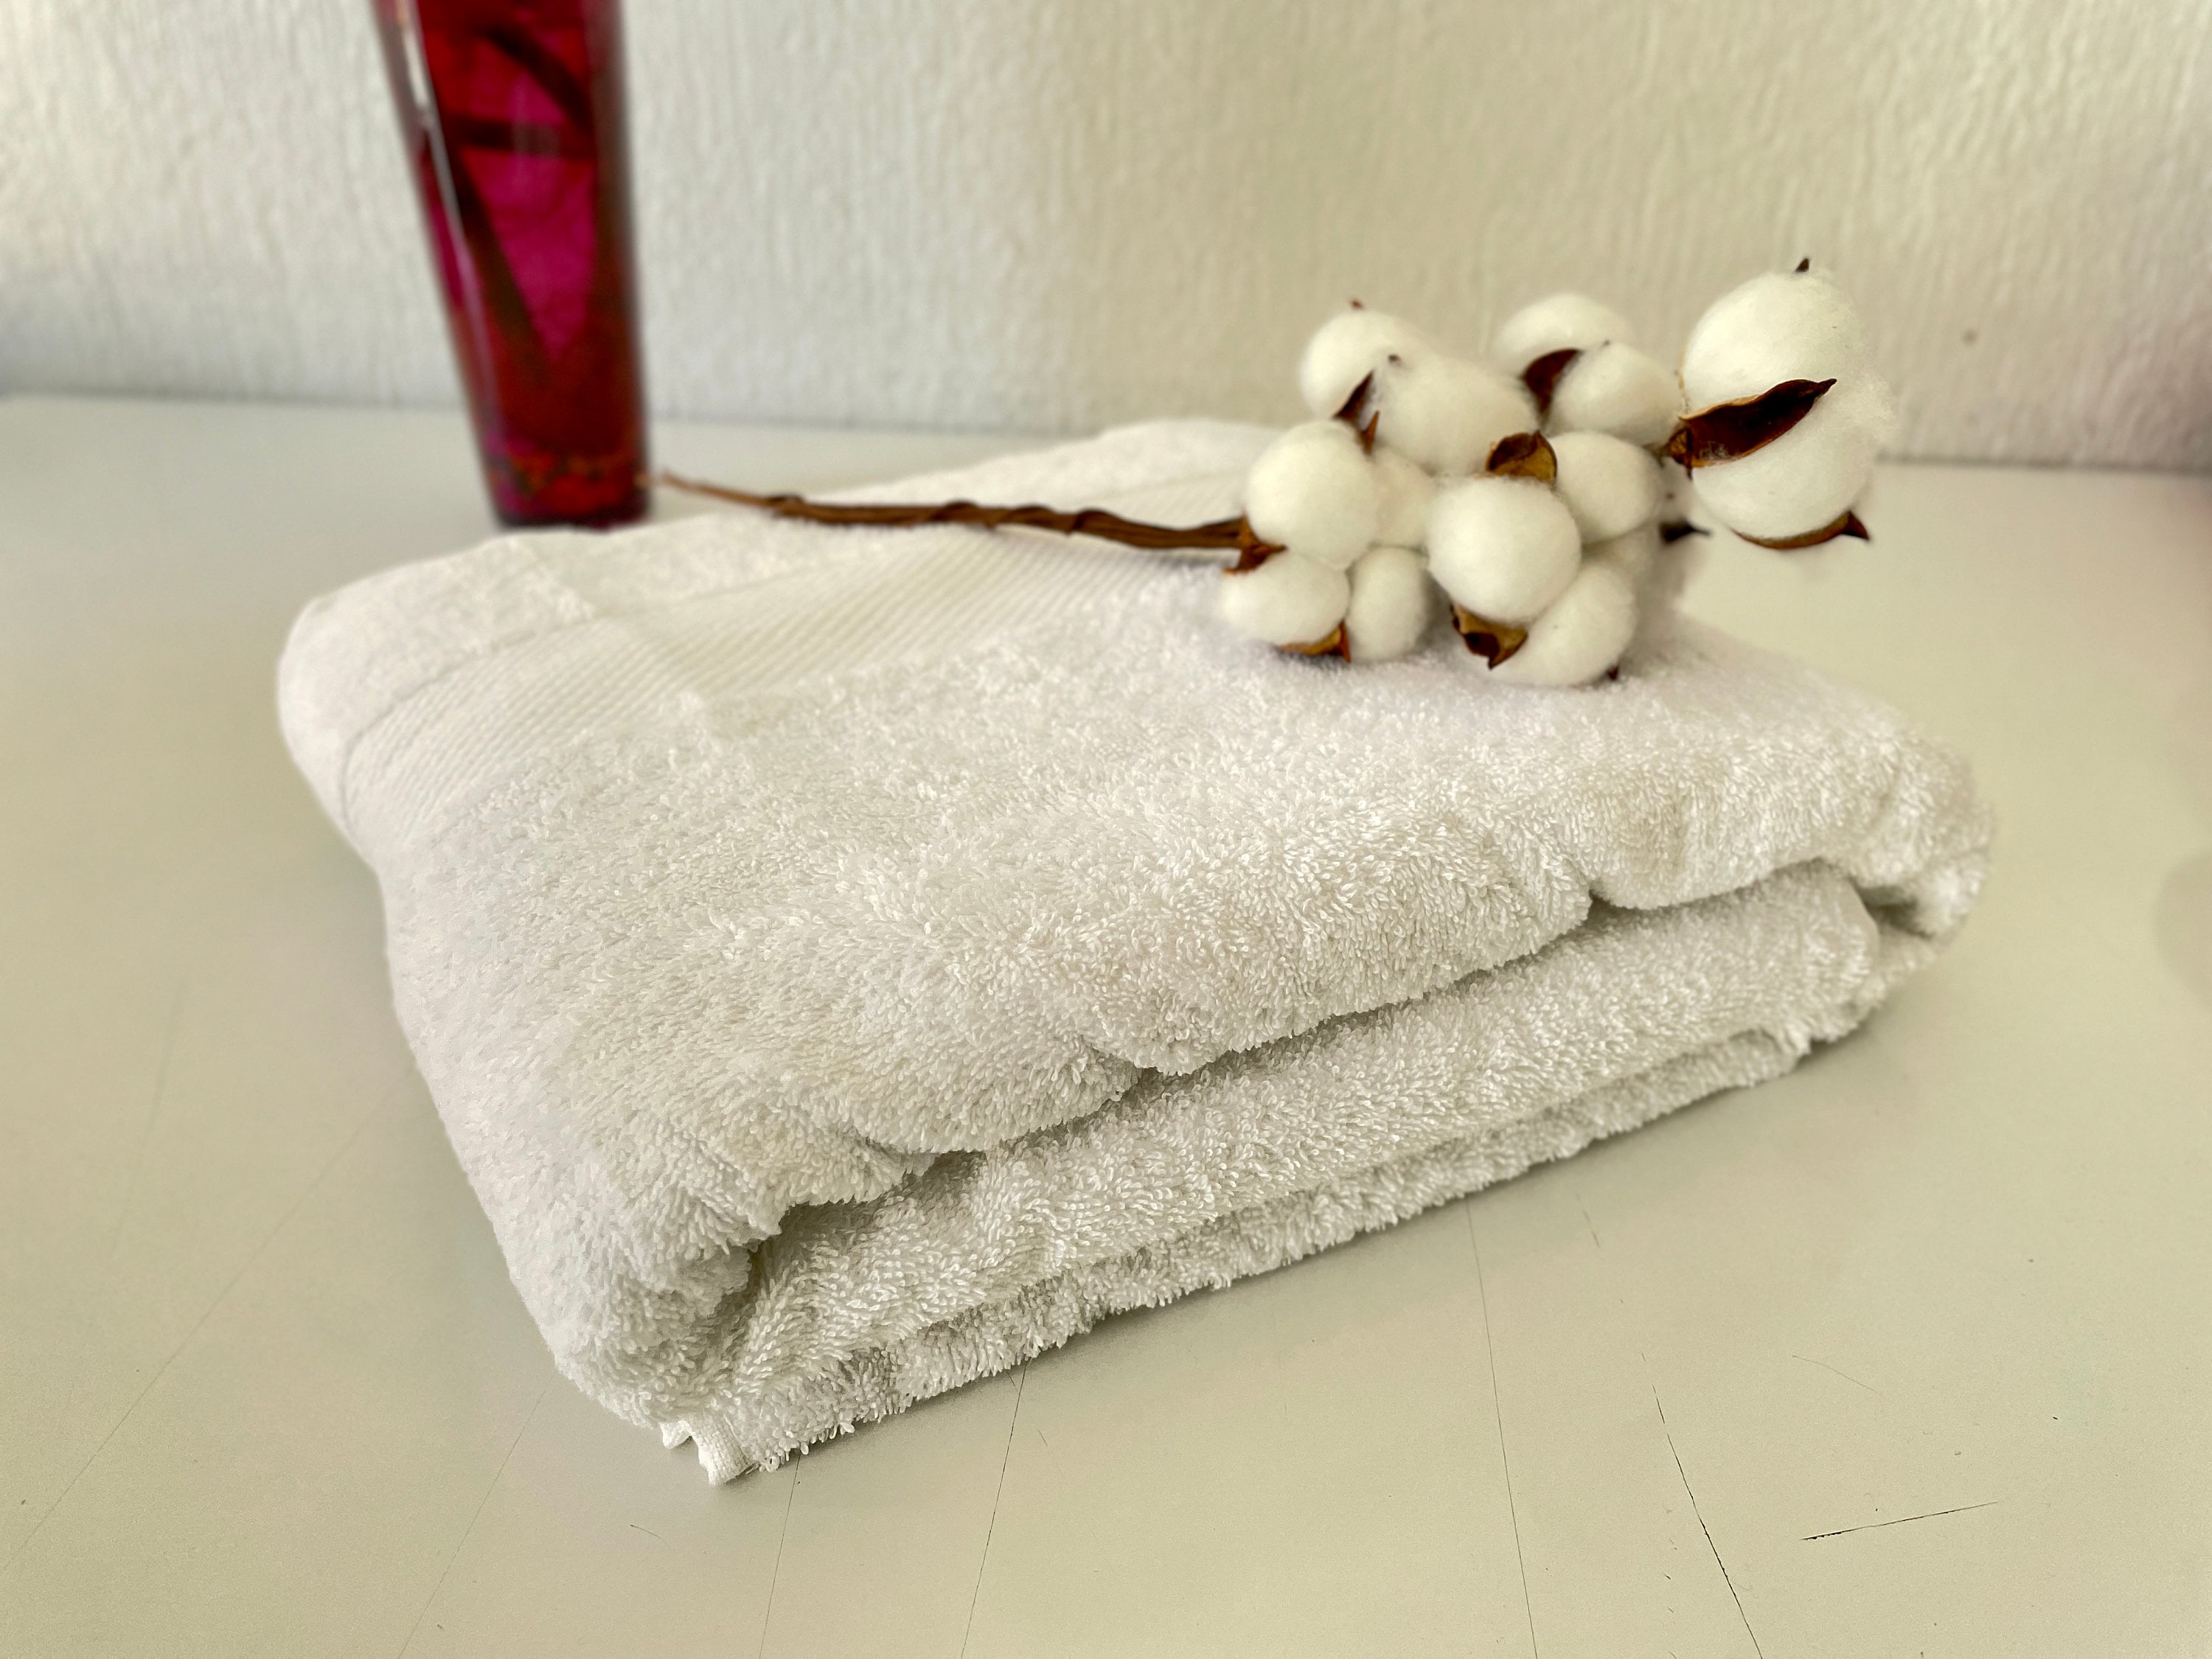 Pack of 4 Extra Large Oversized Bath Towel 100% Cotton Bath Sheet 40x87  White